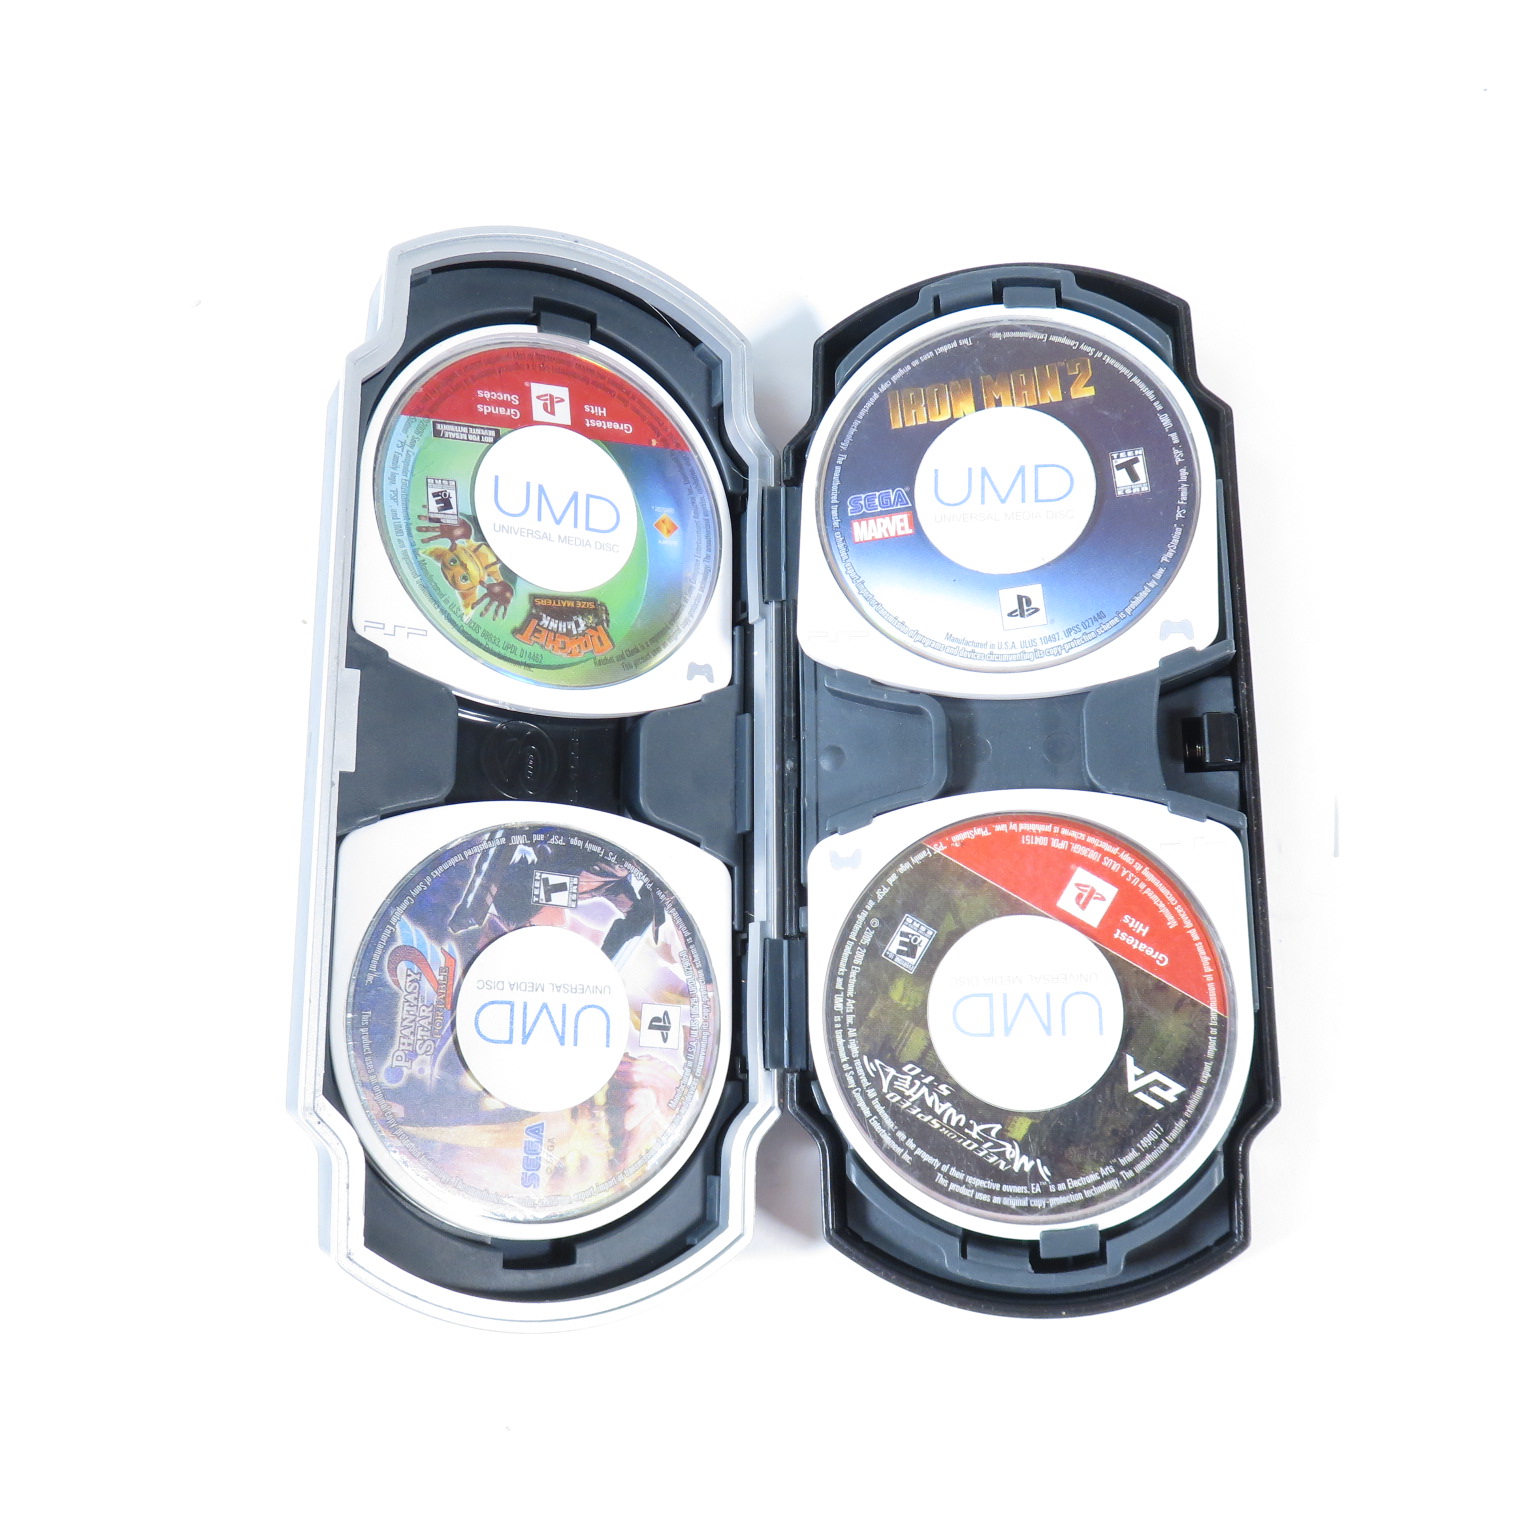 Sony PlayStation Portable PSP-3001 4.3